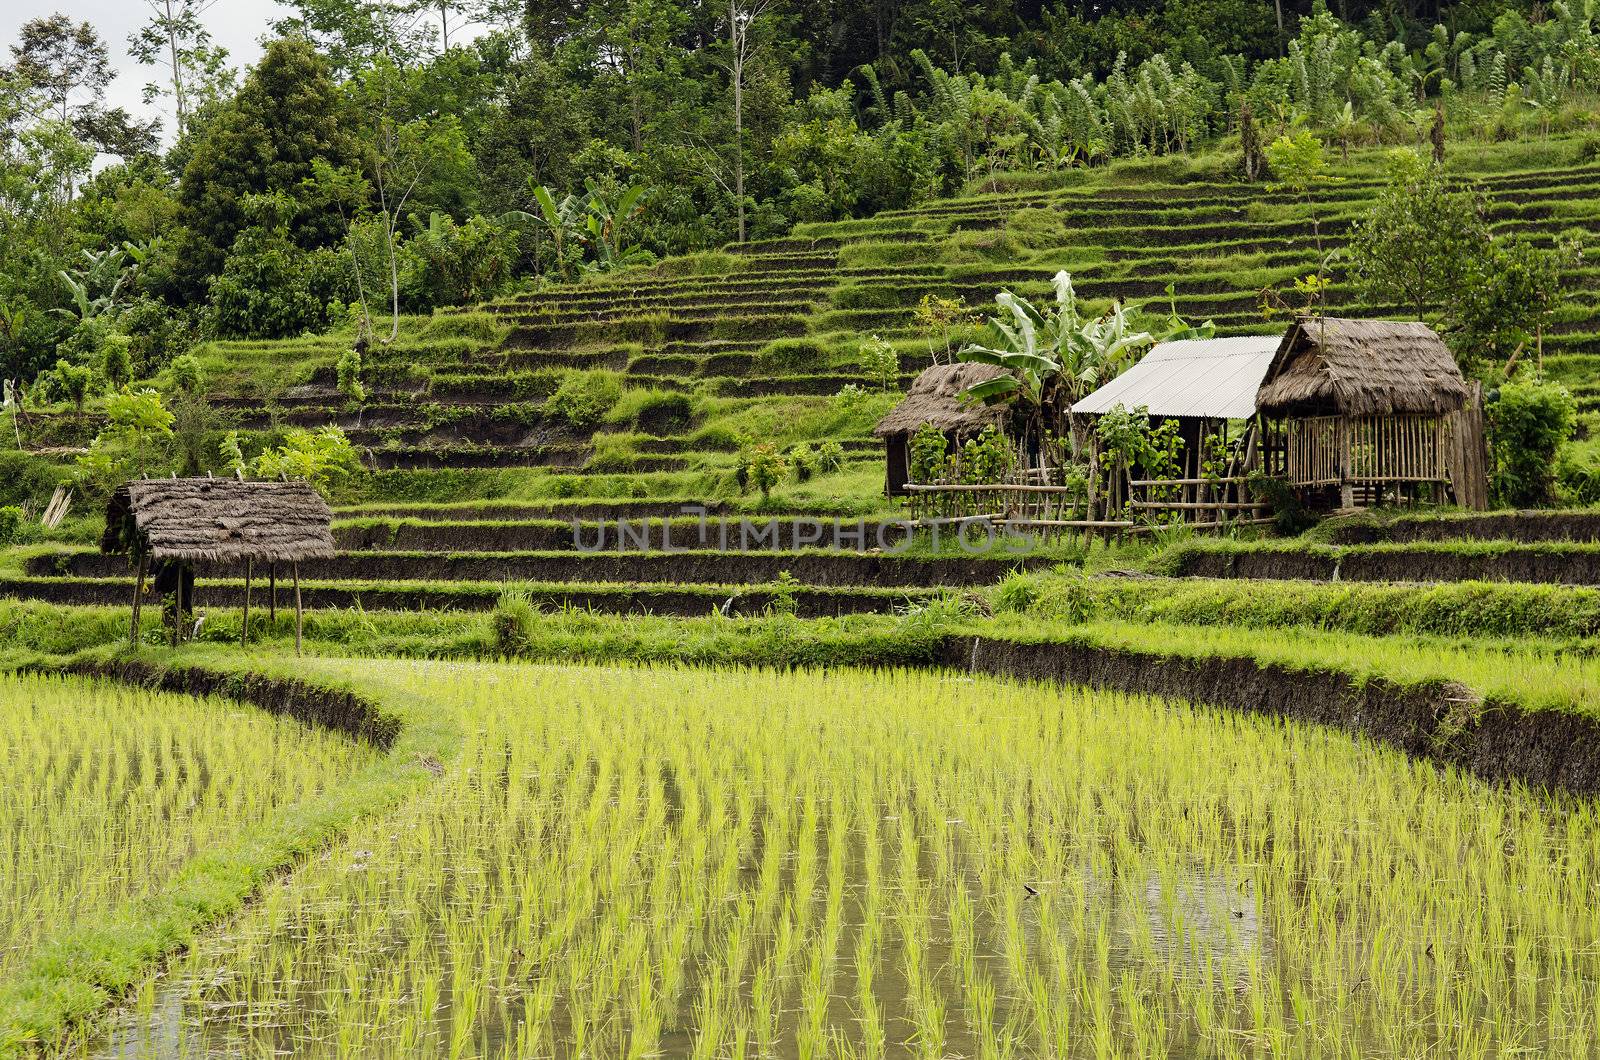 rice field in bali indonesia by jackmalipan